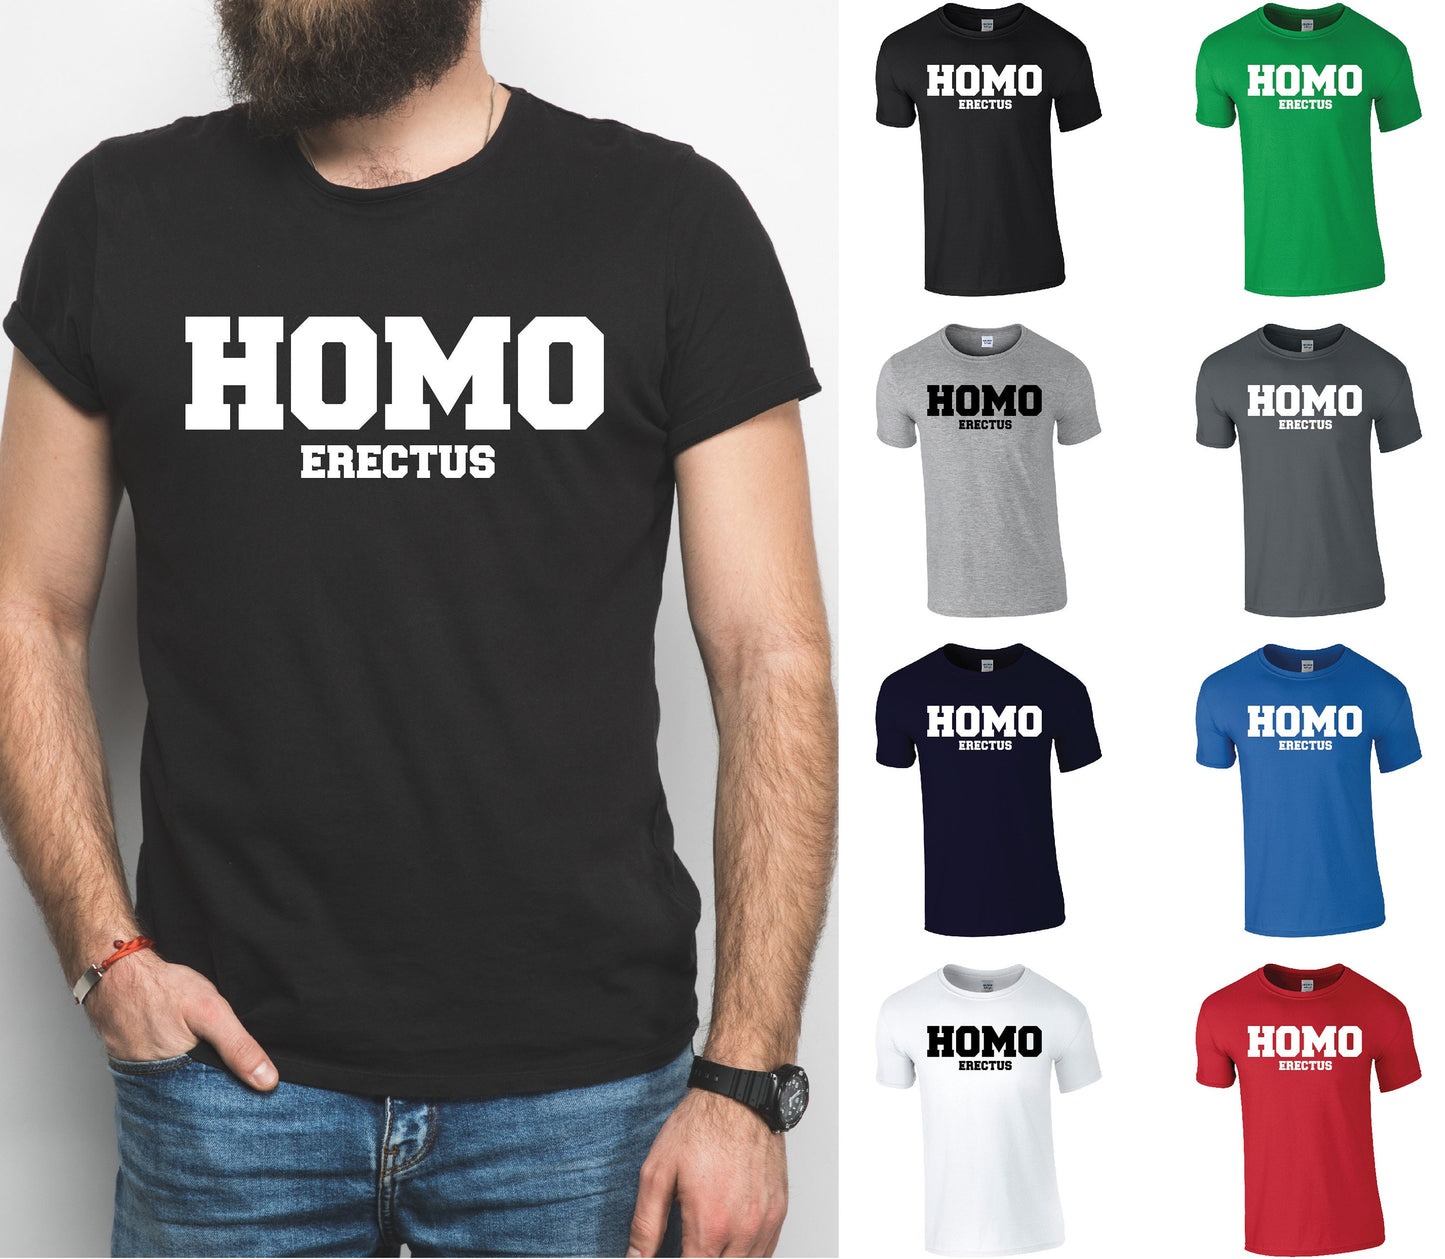 HOMO Erectus T-Shirt - Cool Funny LGBTQ+ Slogan Pride Tee